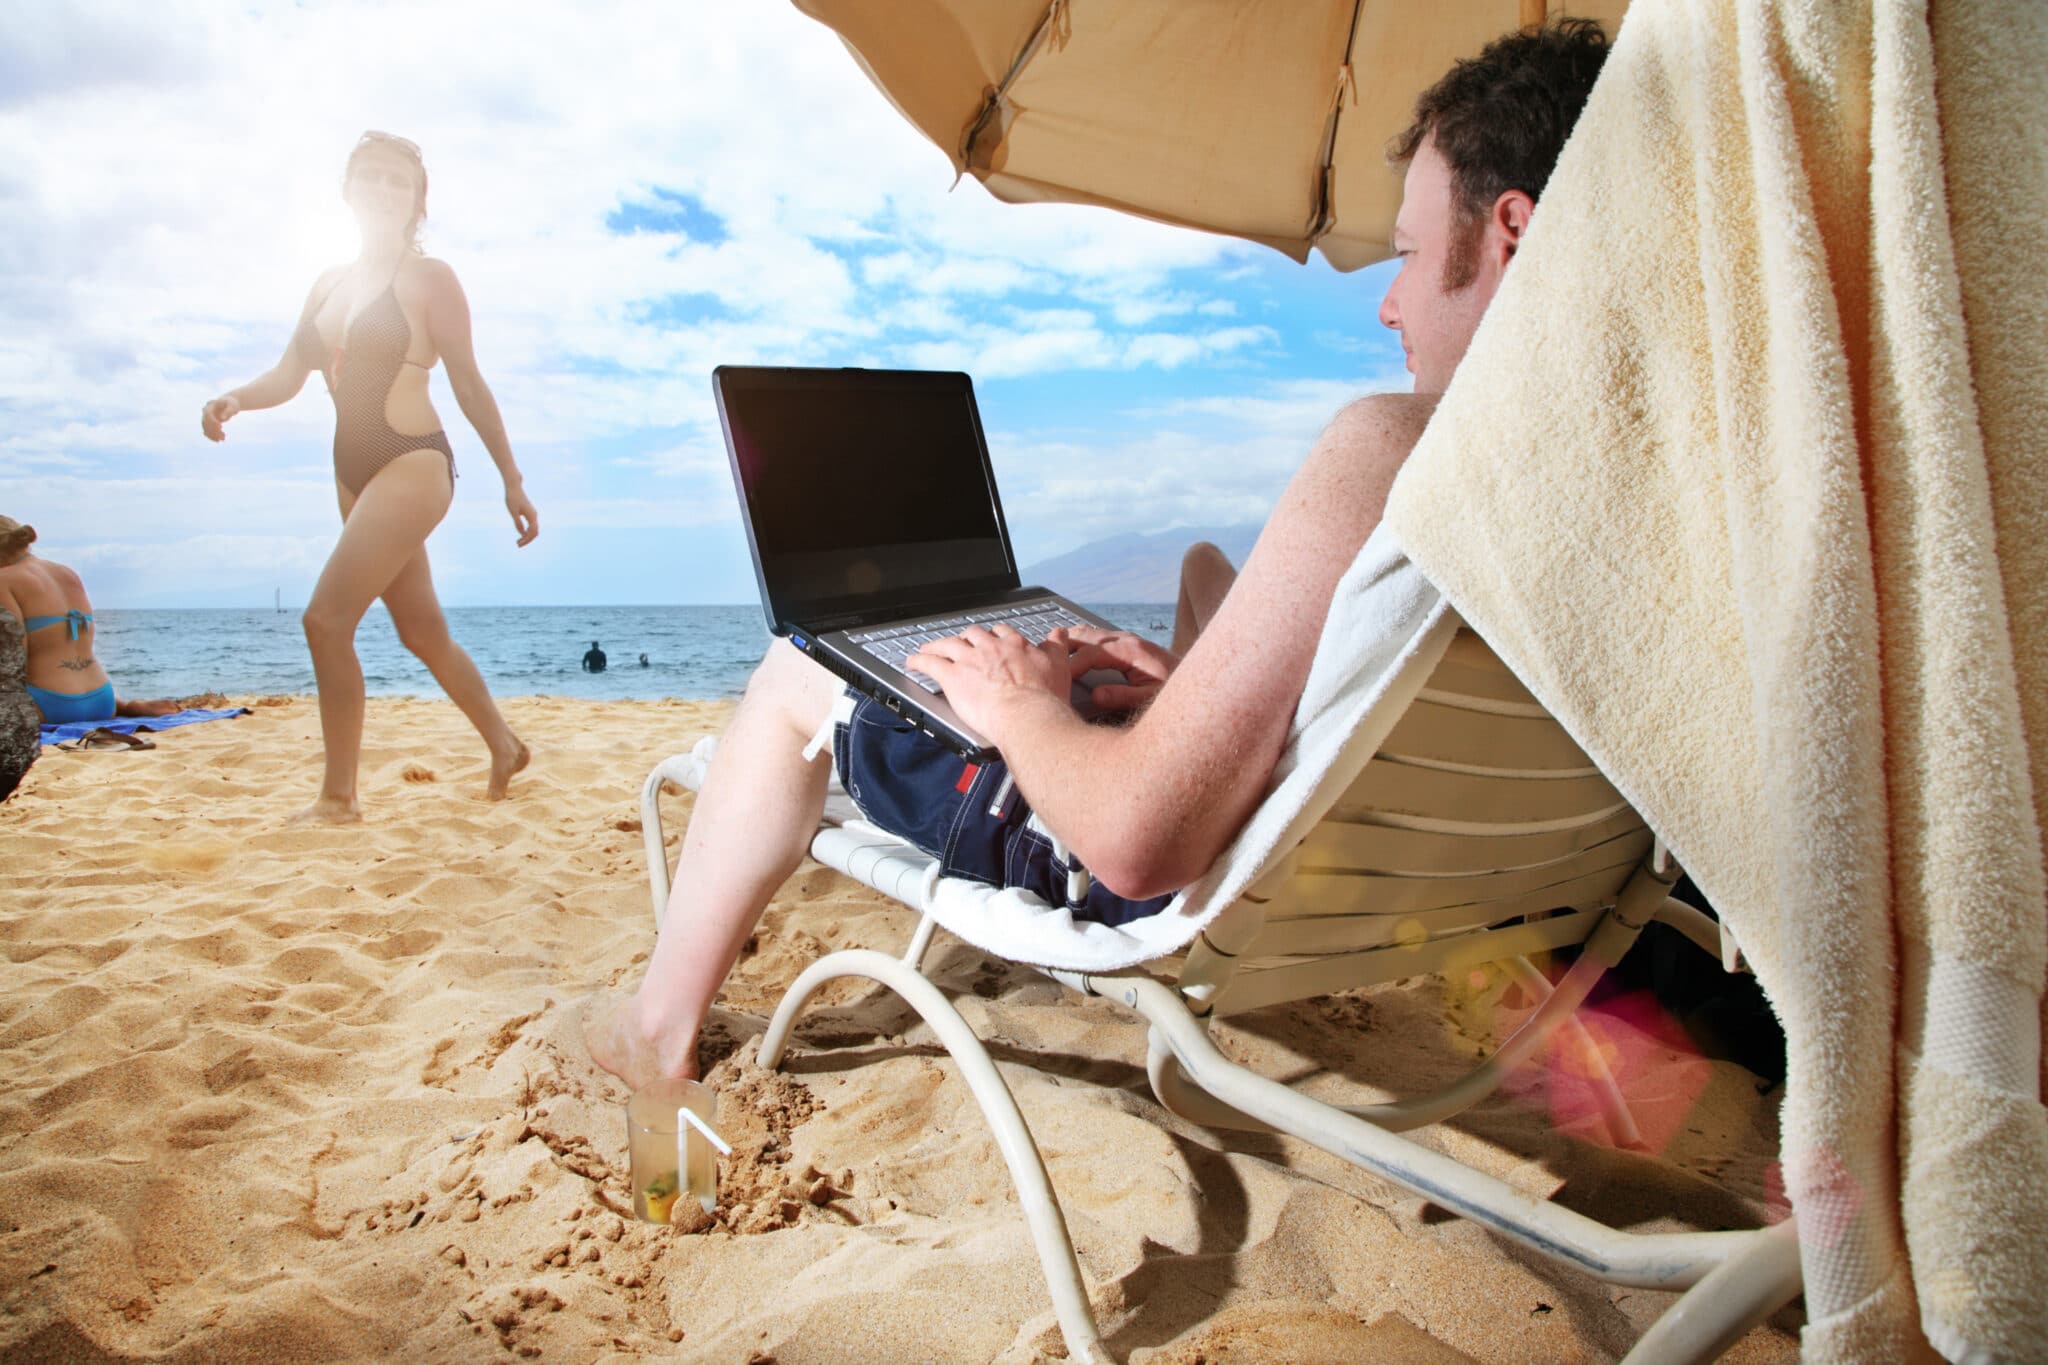 Startup Founder enjoys #MiamiTech life at the beach